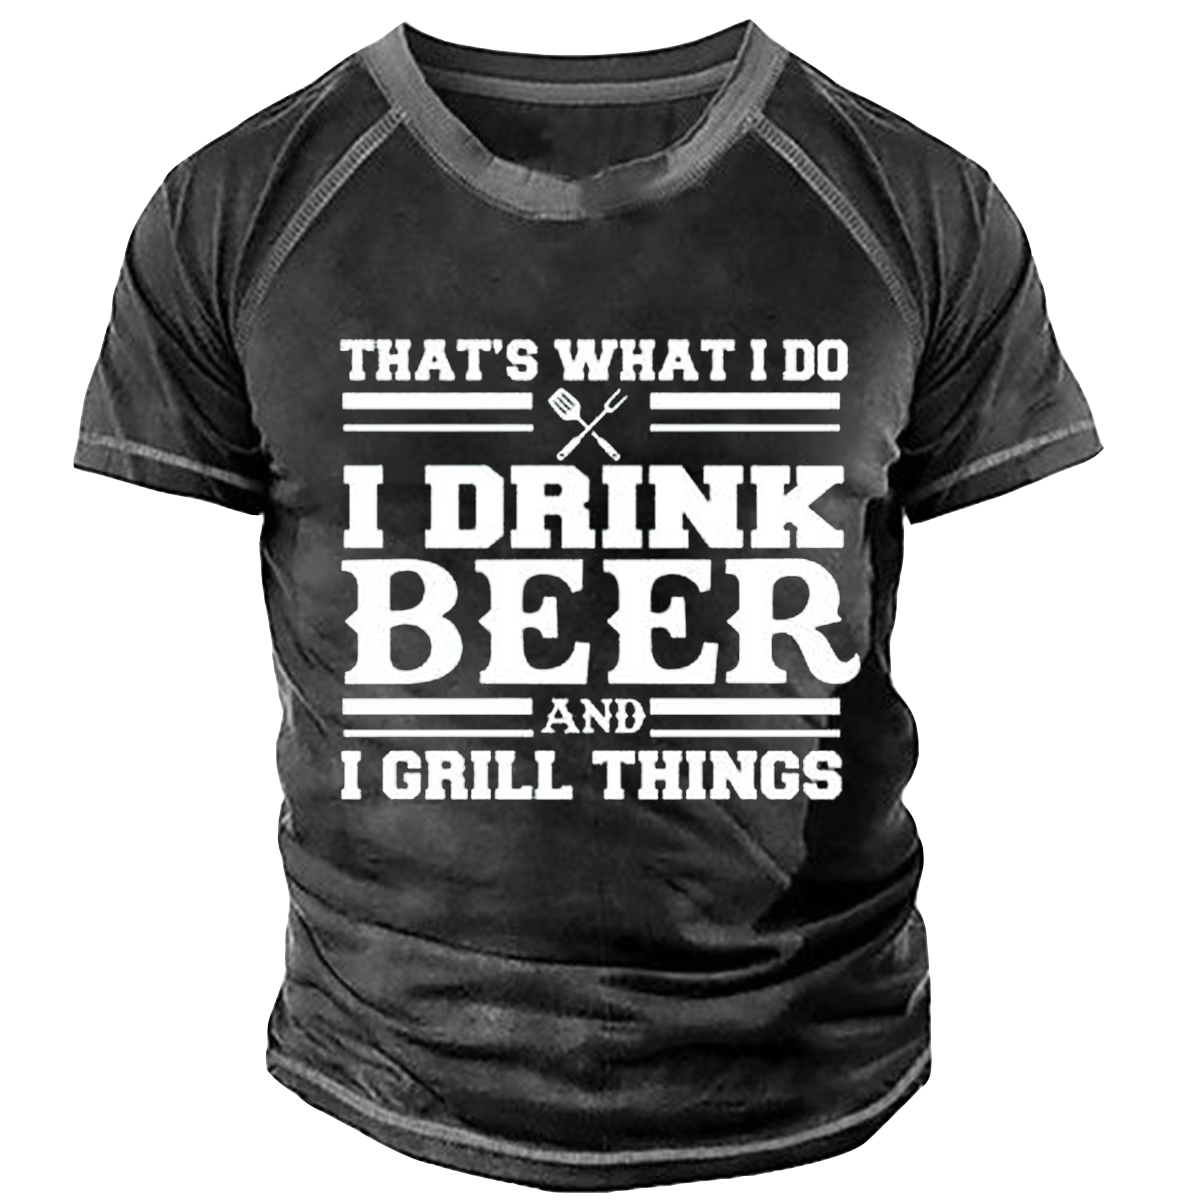 Men's I Drink Beer Chic Short Sleeve T-shirt